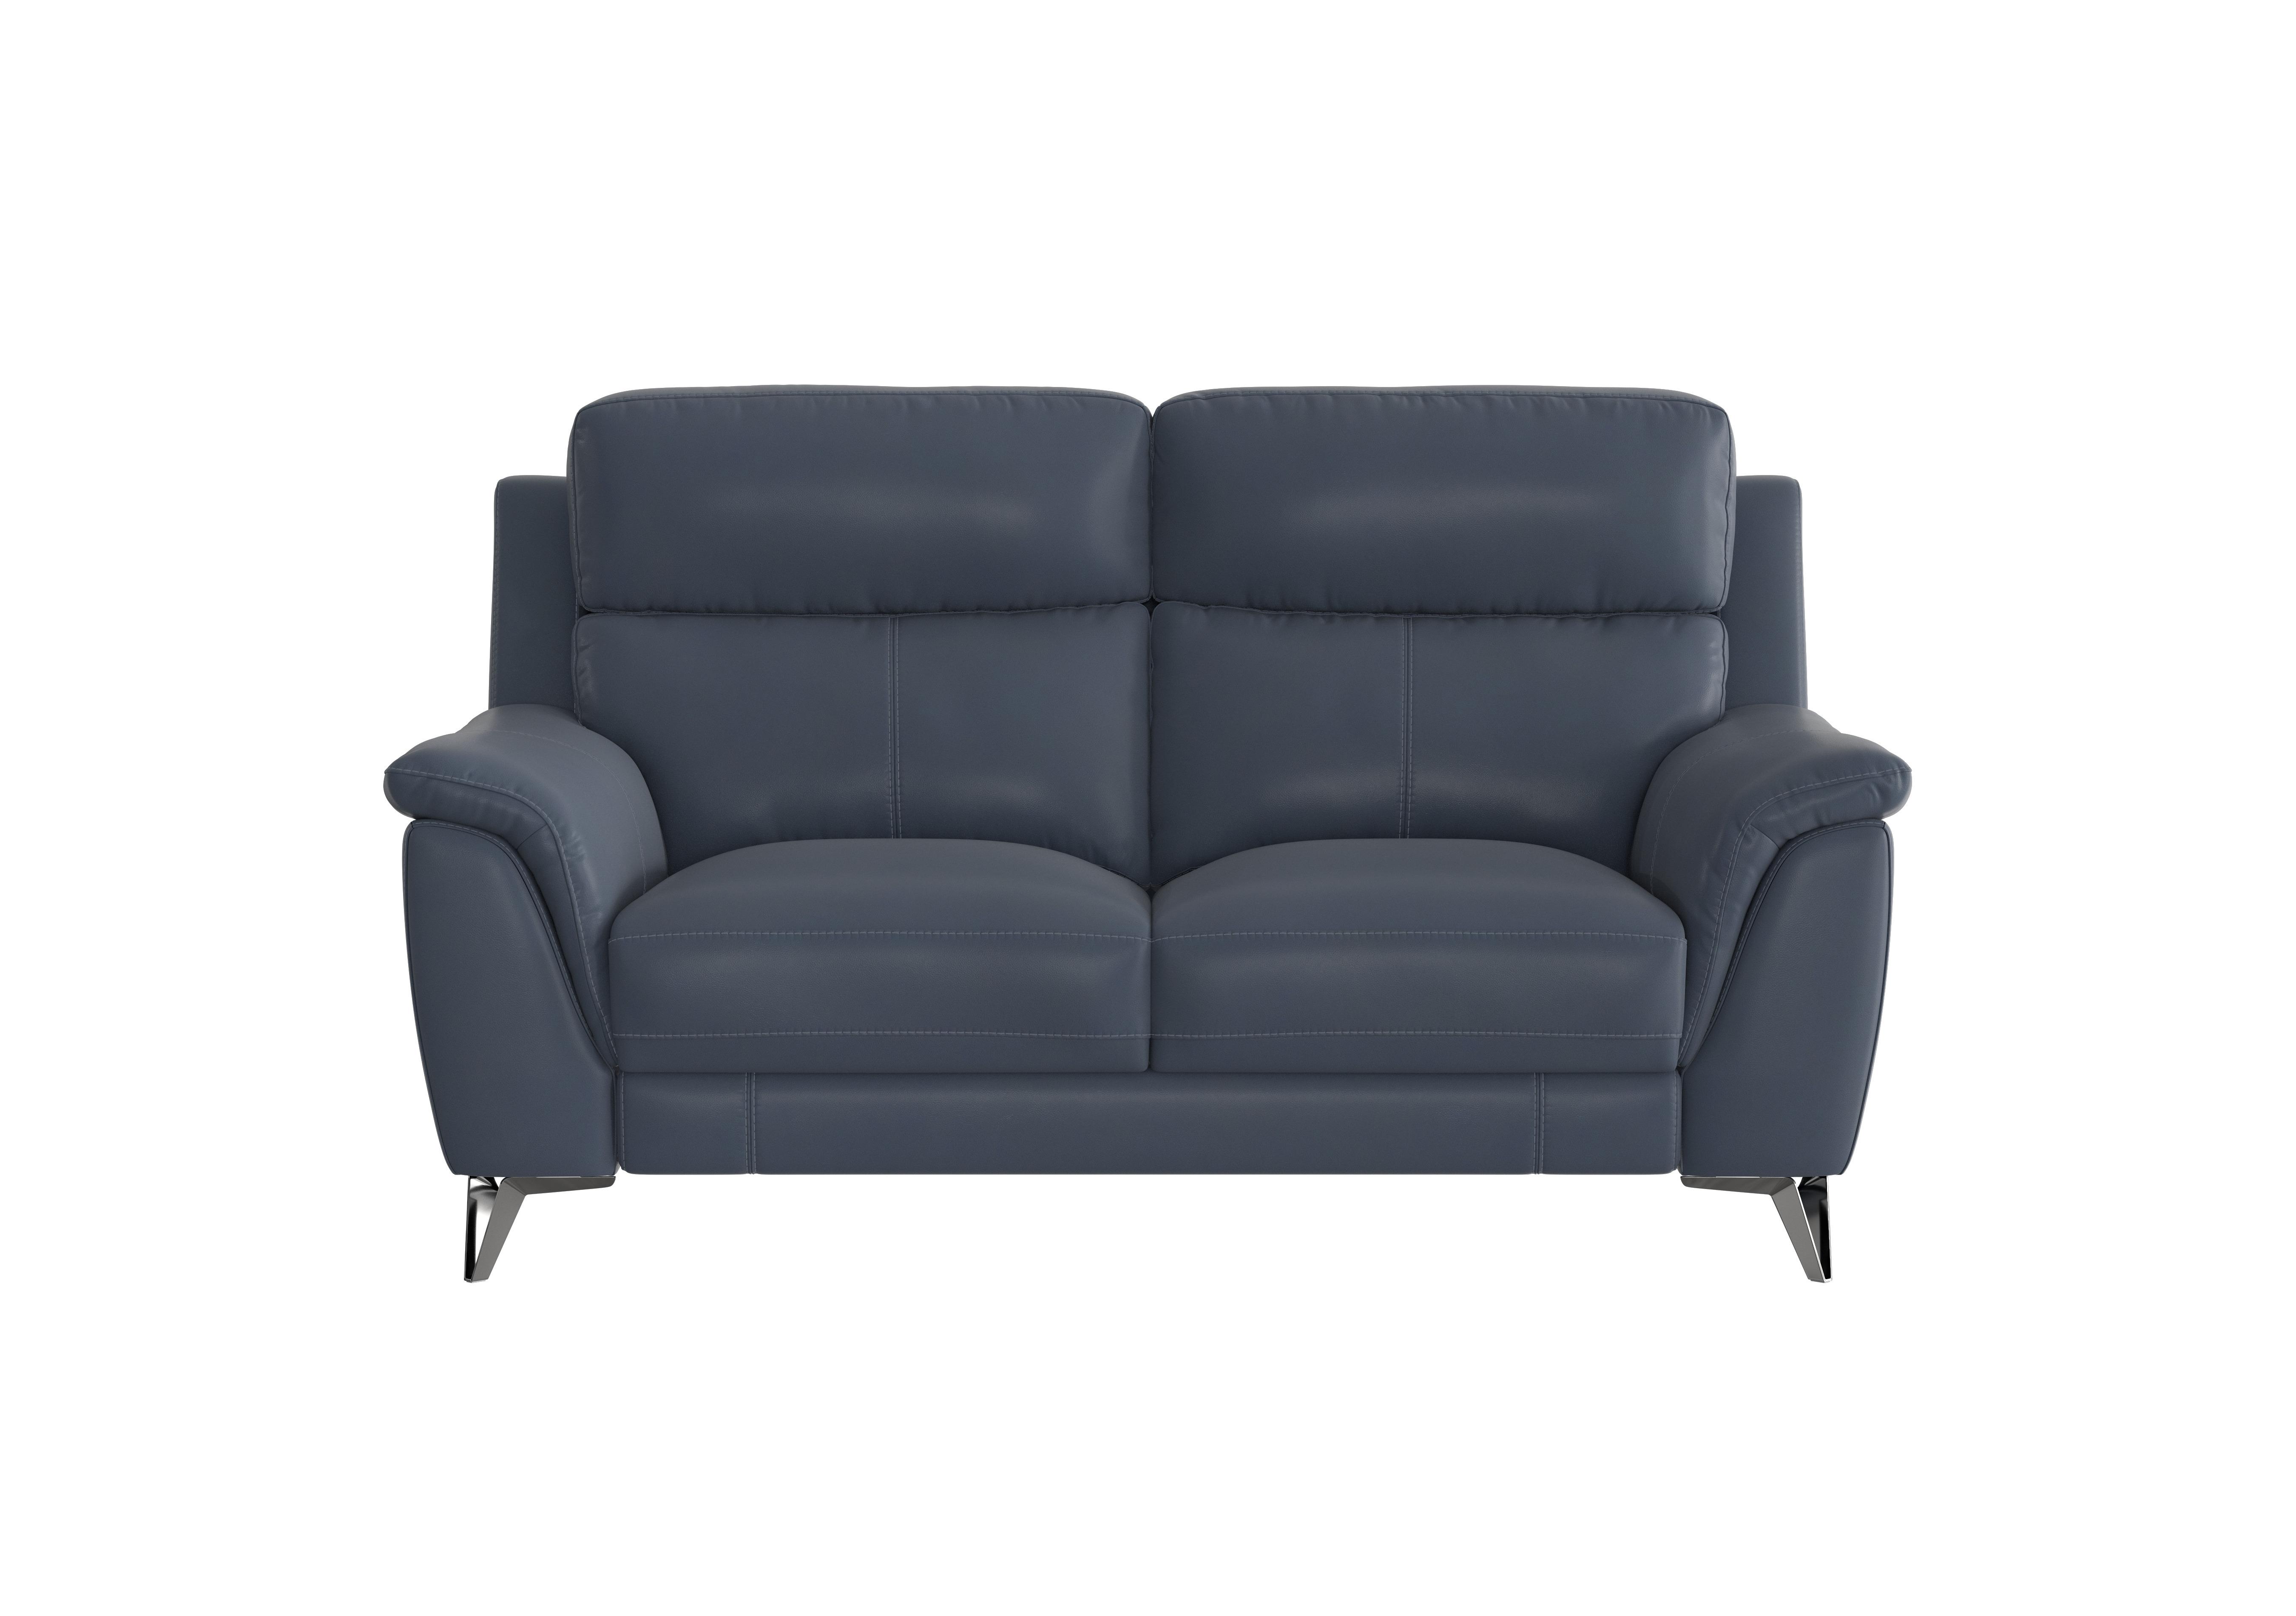 Contempo 2 Seater Leather Sofa in Bv-313e Ocean Blue on Furniture Village